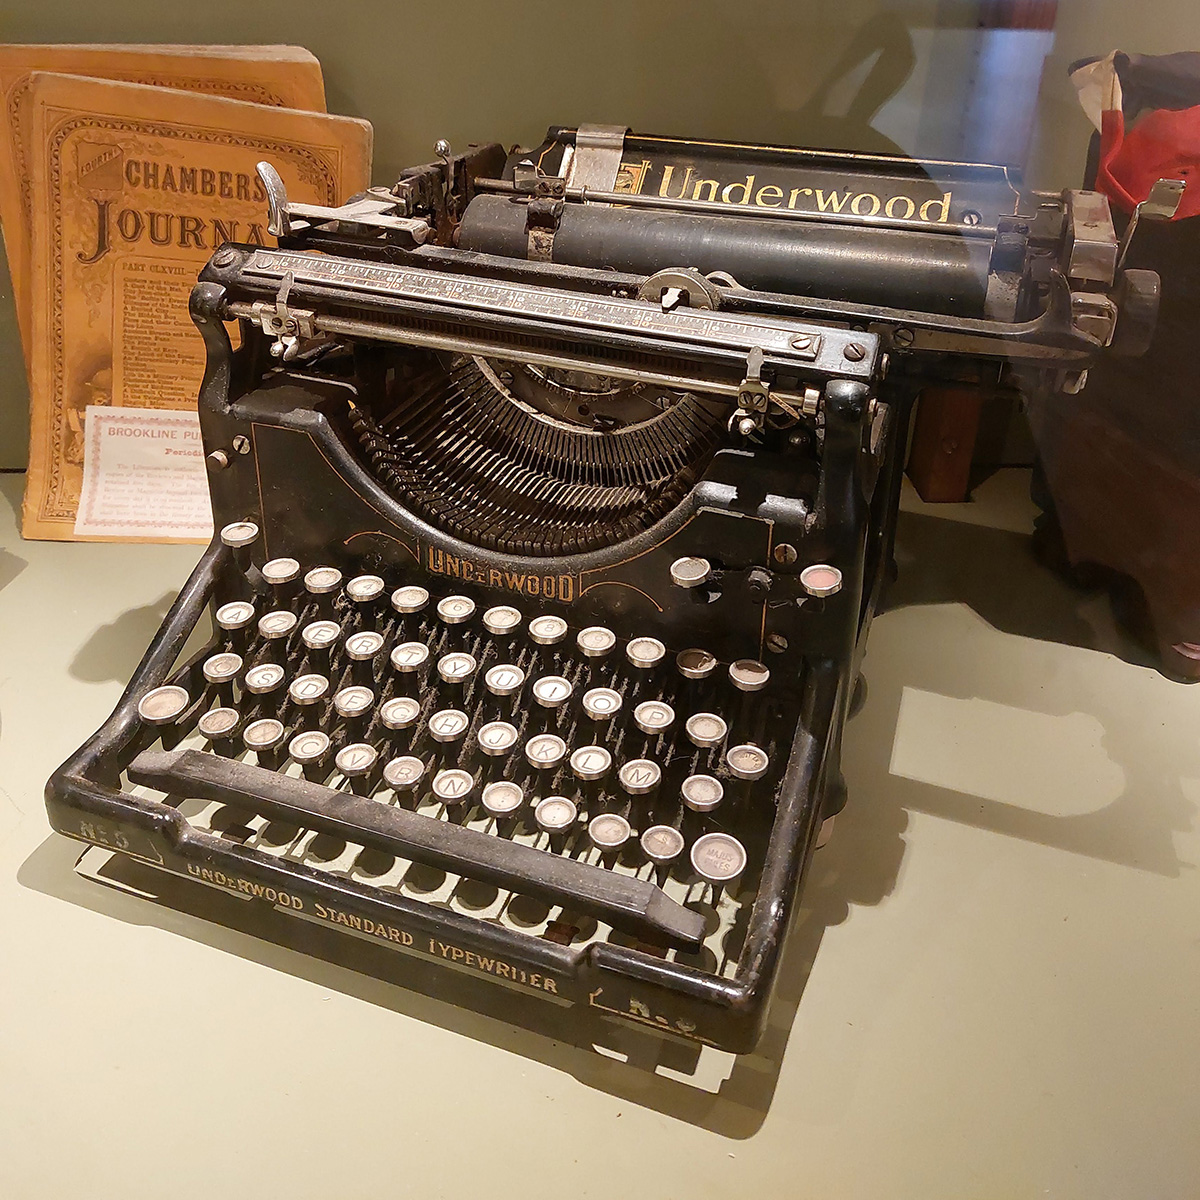 A classic black typewriter with round keys, the logo says Underwood nr 5